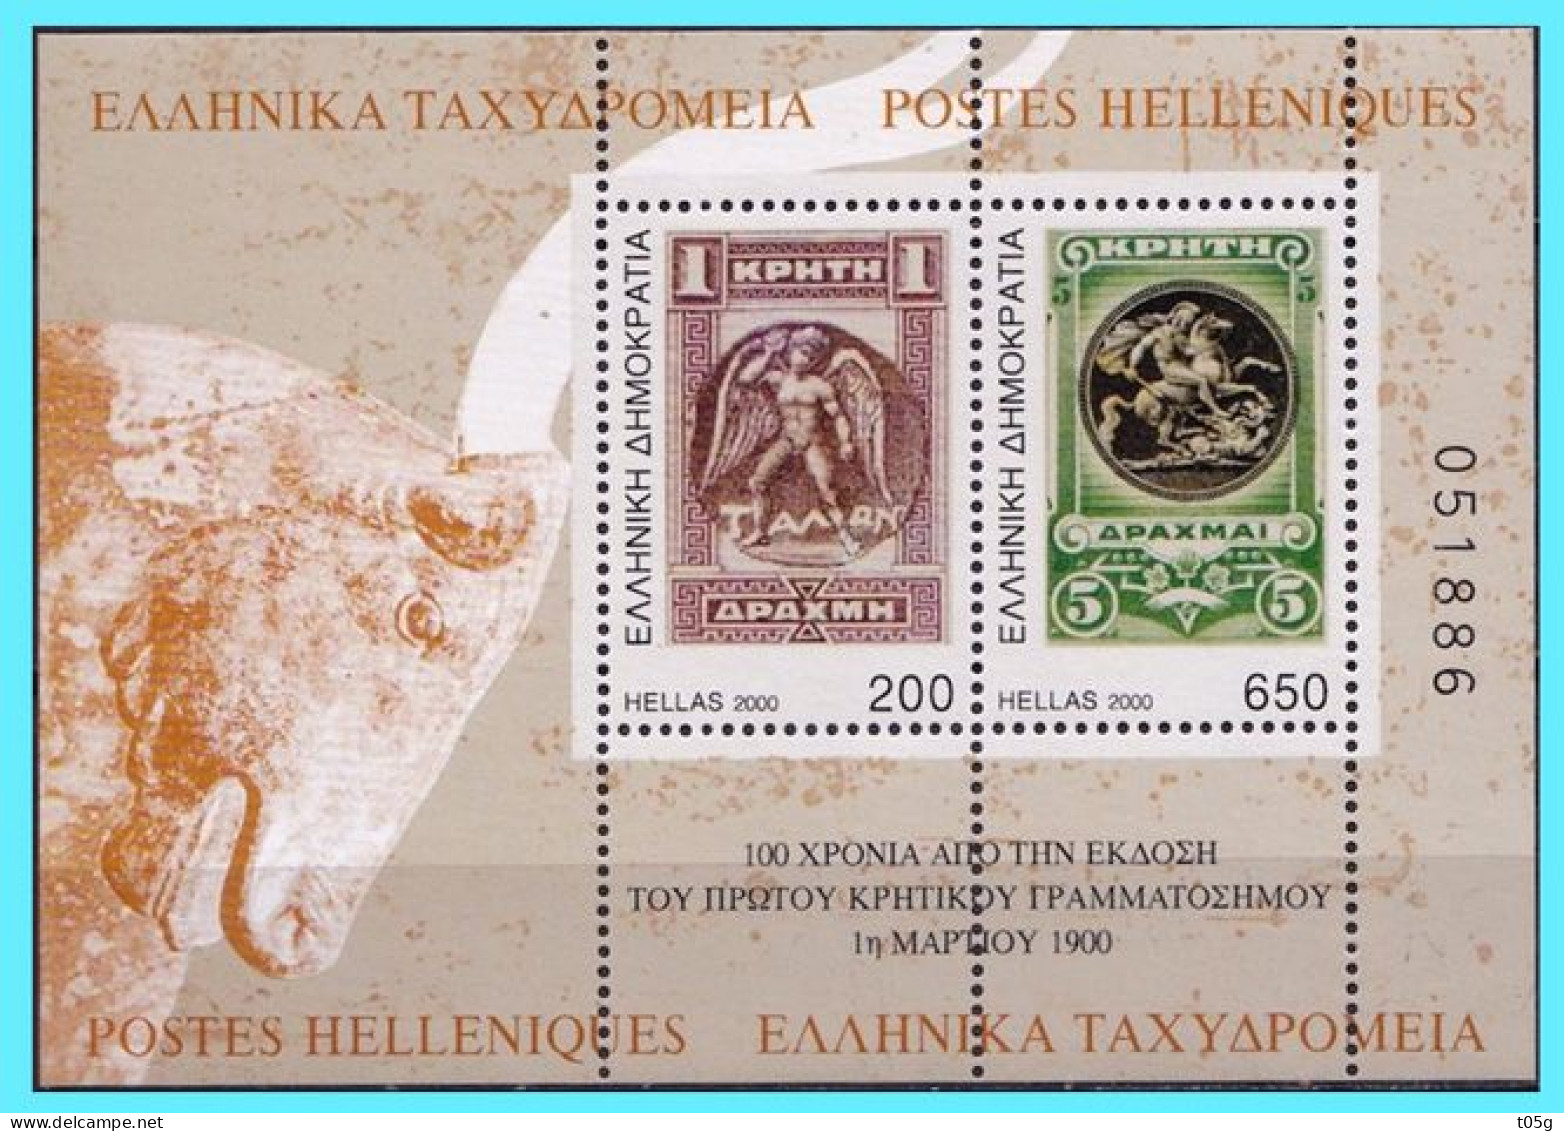 GREECE- GRECE- HELLAS 2000:  The Stamps Of Crete Miniature Sheet MNH** - Nuevos